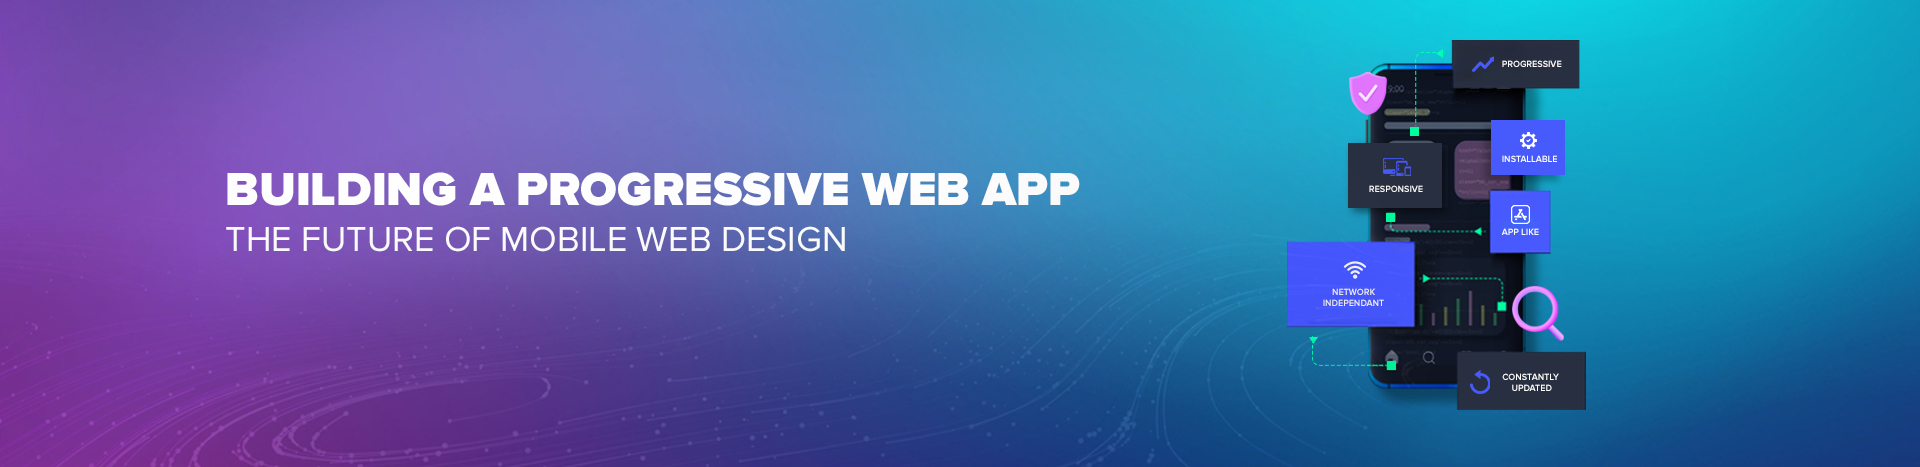 Progresive Web App